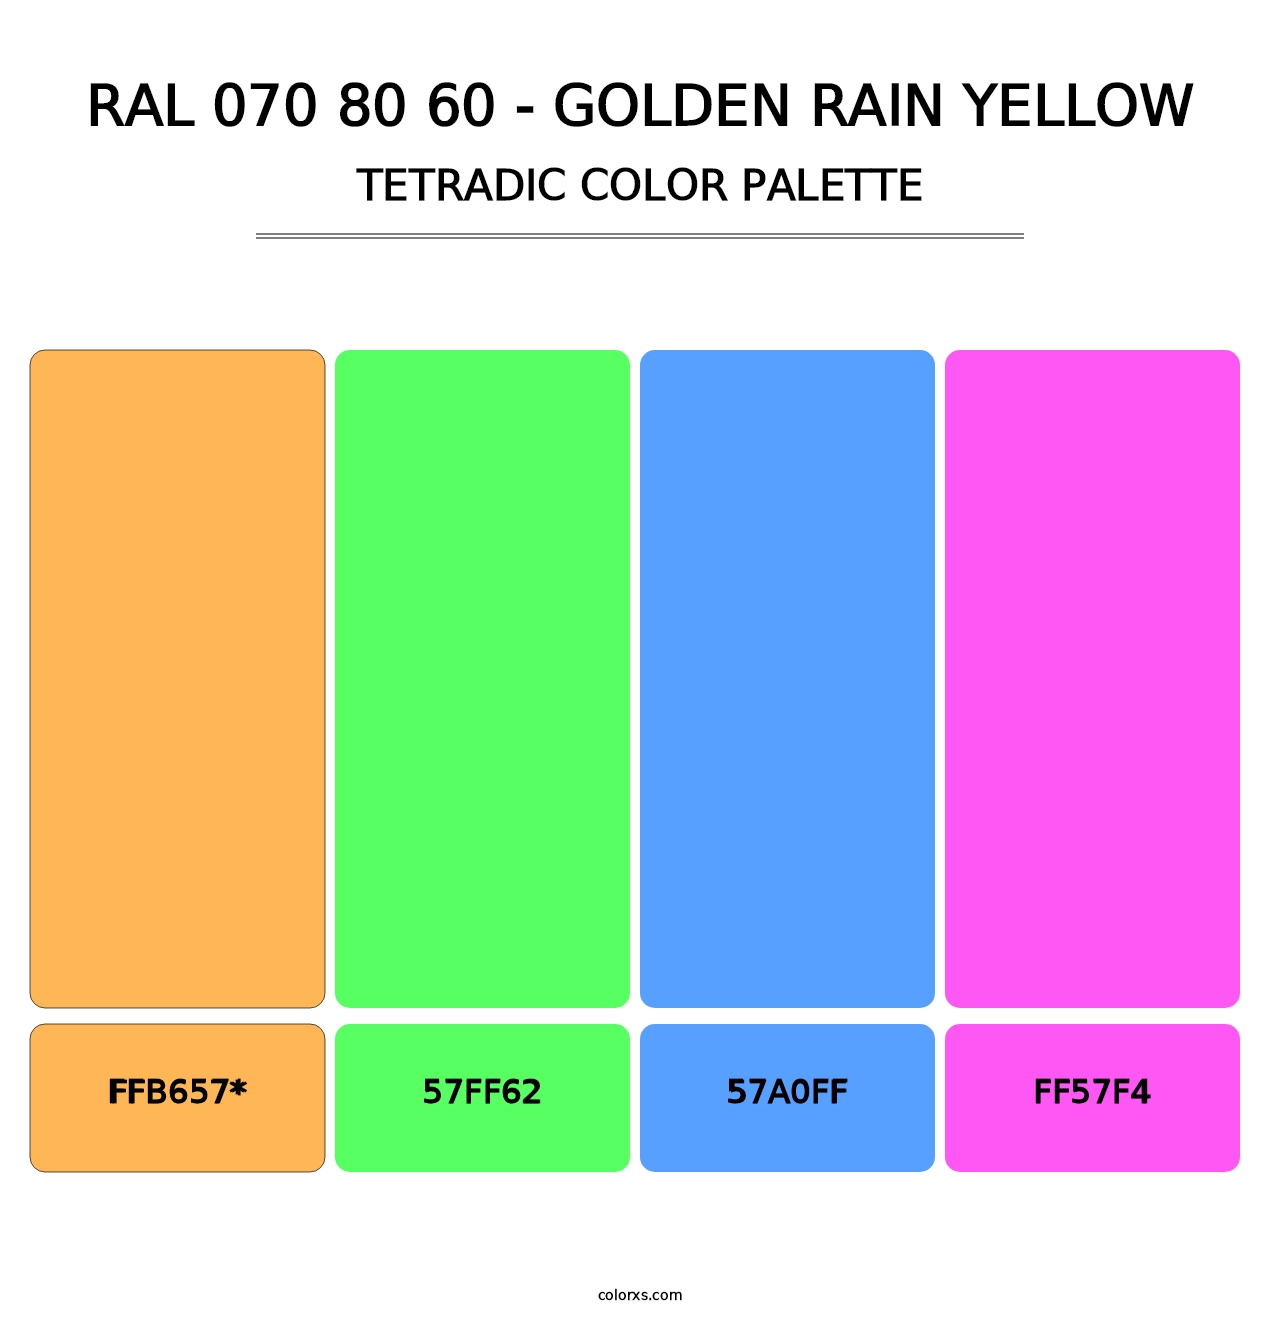 RAL 070 80 60 - Golden Rain Yellow - Tetradic Color Palette